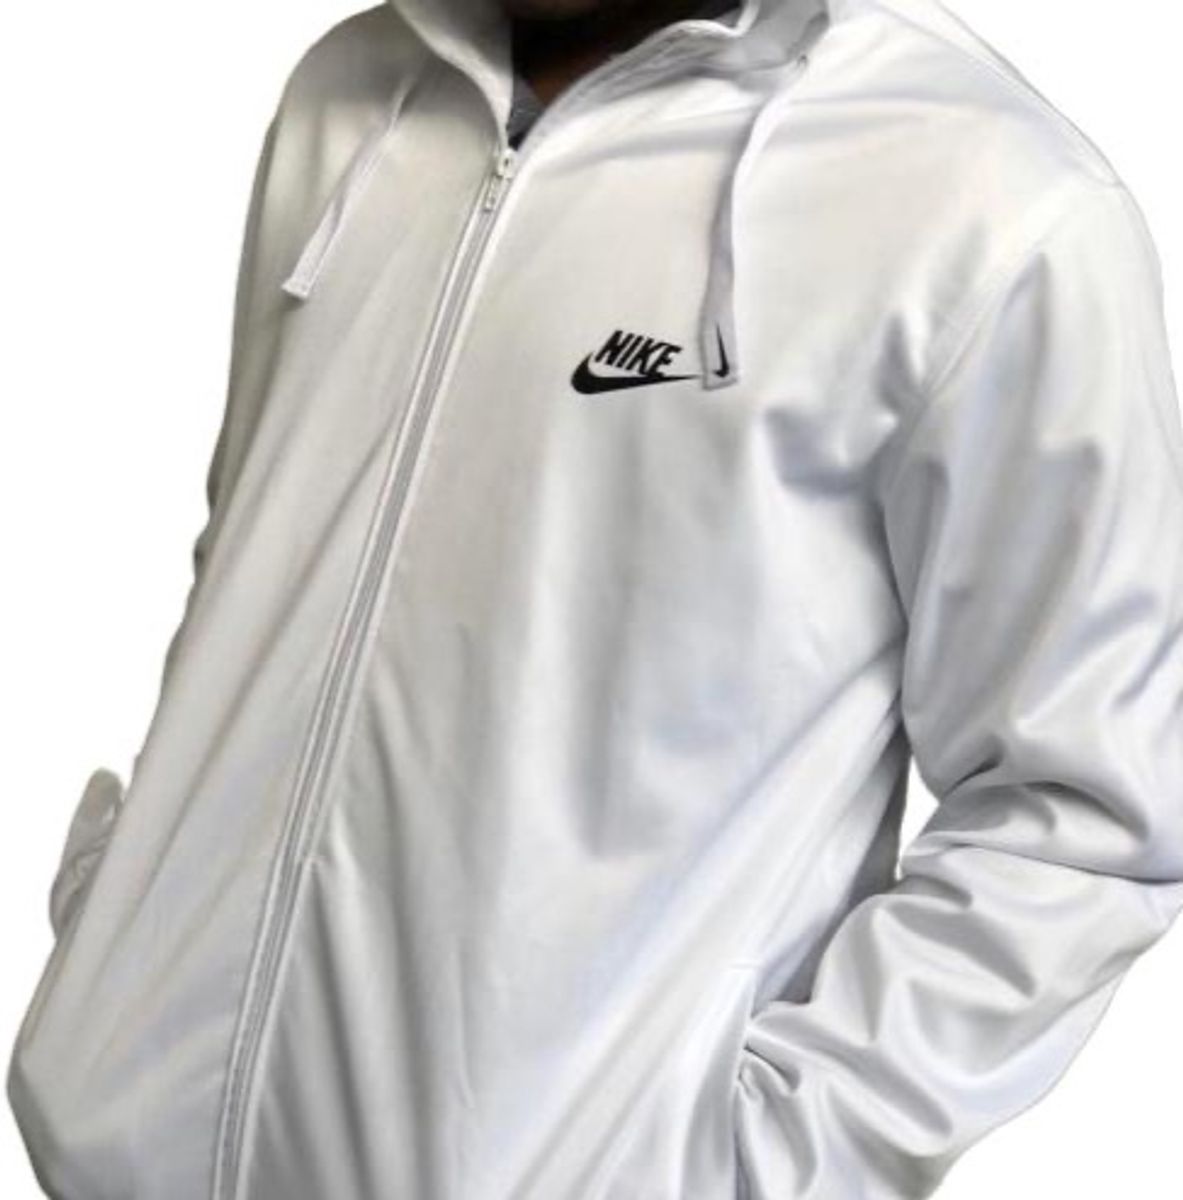 Blusa de Frio Corta Vento Nike Branca Símbolo Refletivo Tamanho G | Casaco Masculino Nunca 42081364 |